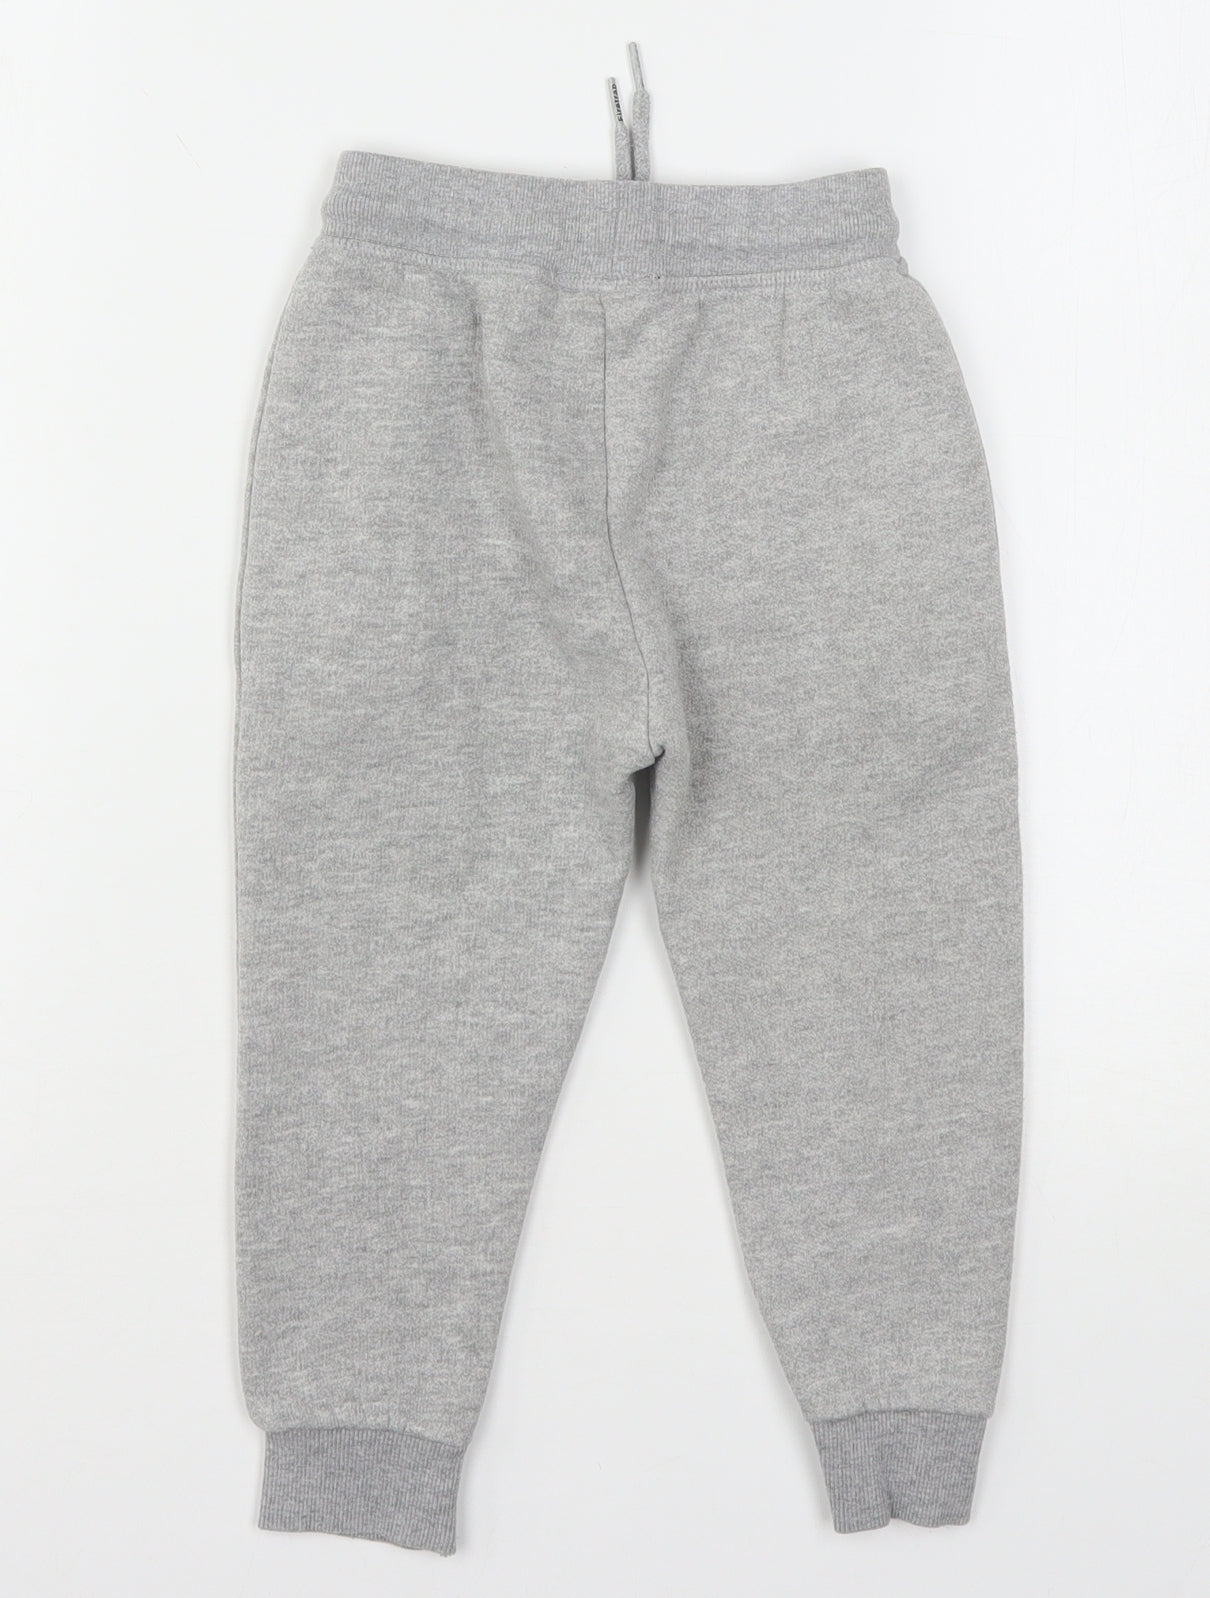 Firetrap Girls Grey  Polyester Sweatpants Trousers Size 3-4 Years  Regular Drawstring